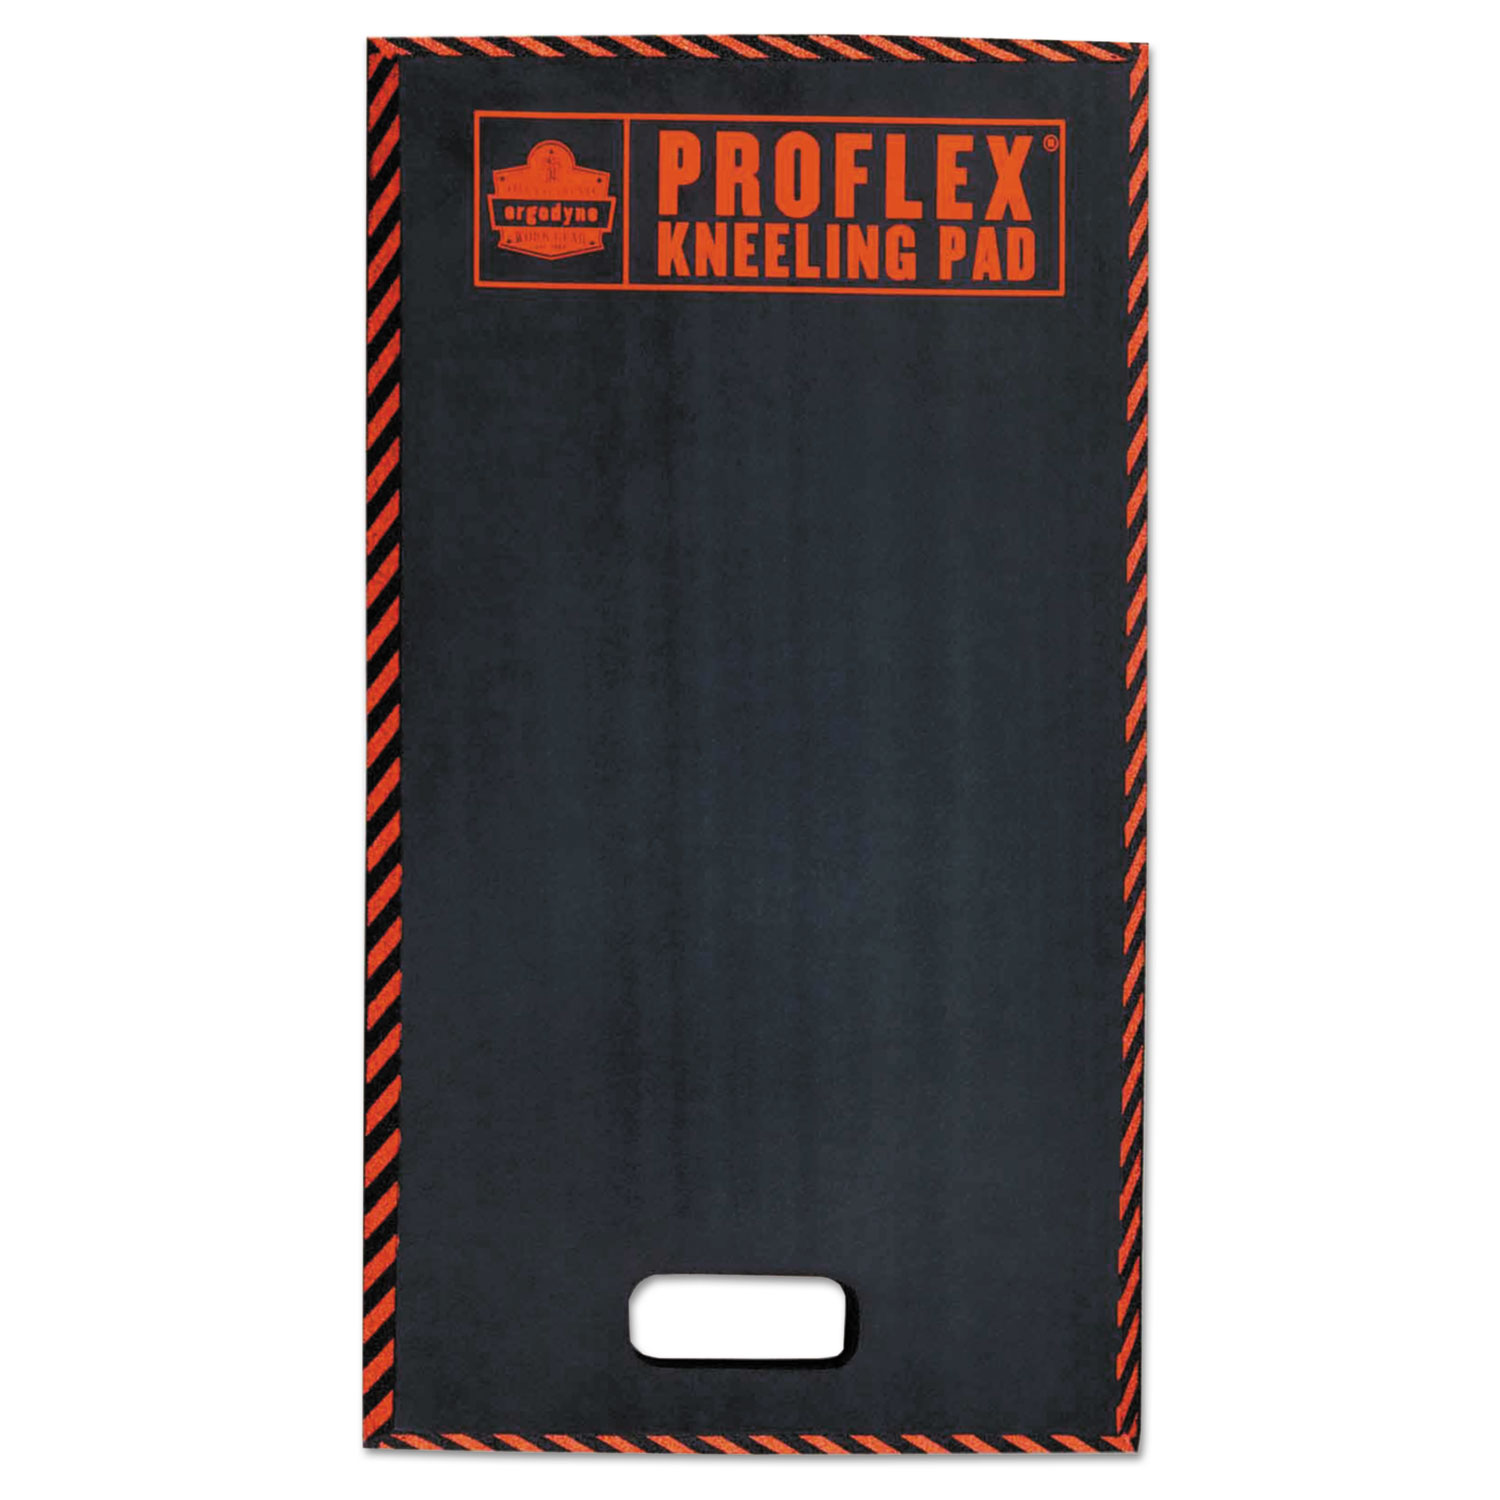 ProFlex 385 Large Kneeling Pad, 16 x 28 x 1, Black/Orange